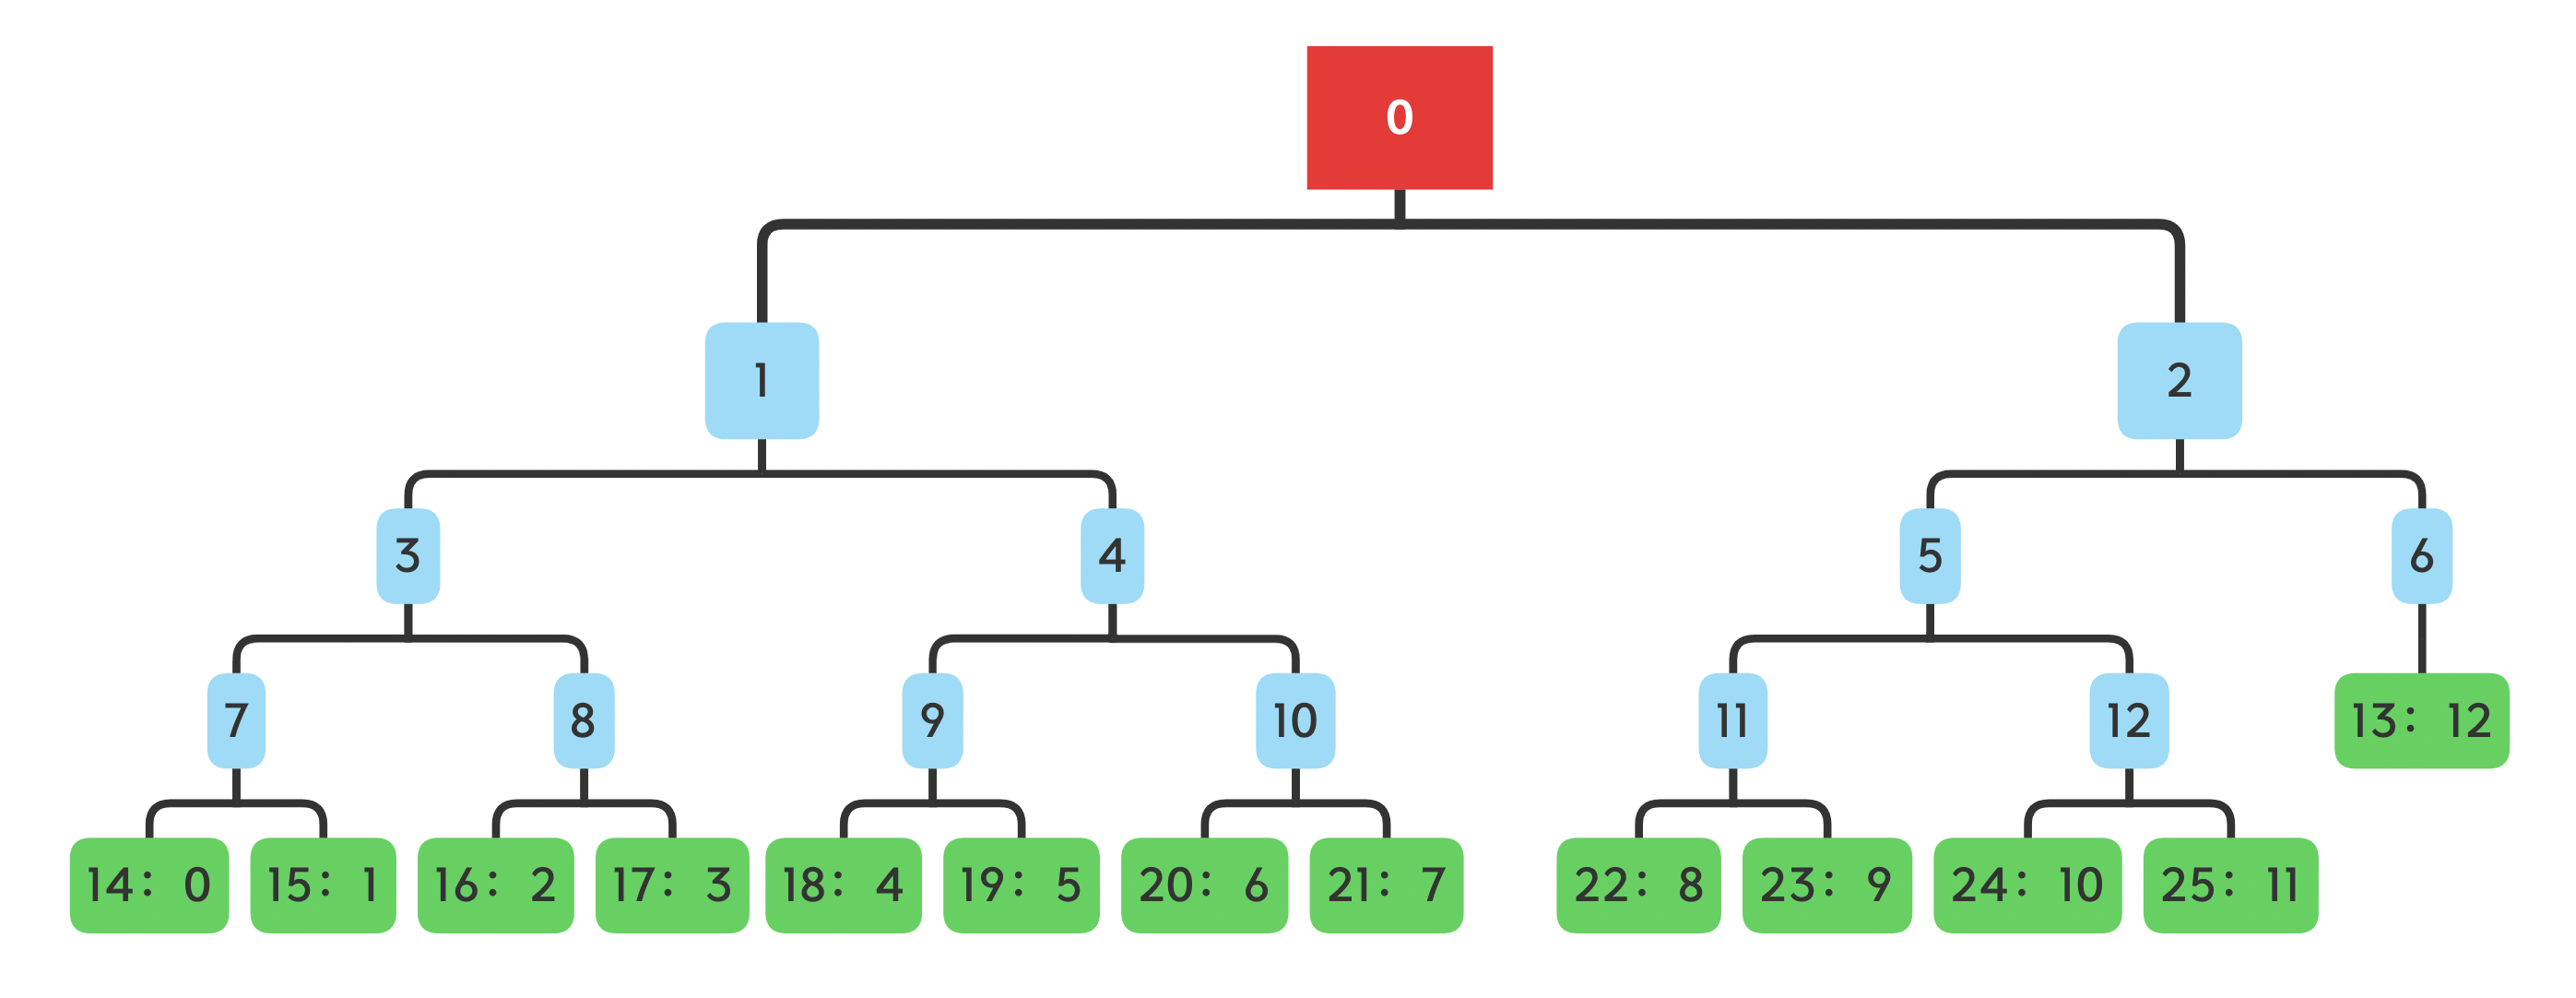 models/treebased/tdm/img/demo_tree.png